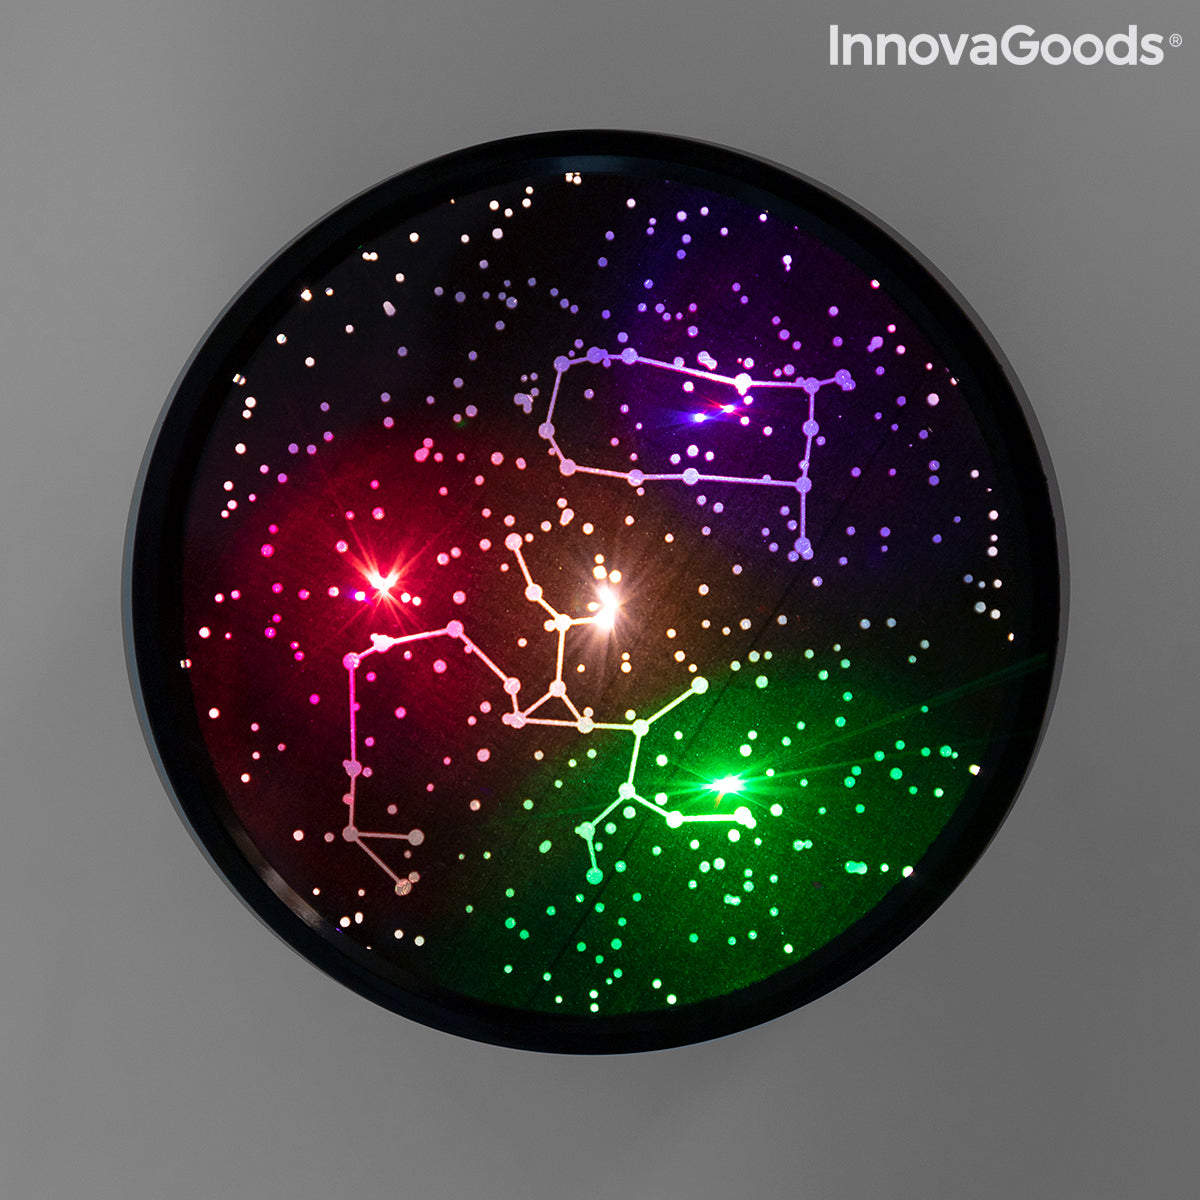 Innova leds venta de luces eventos cronometros : Proyector Galaxia